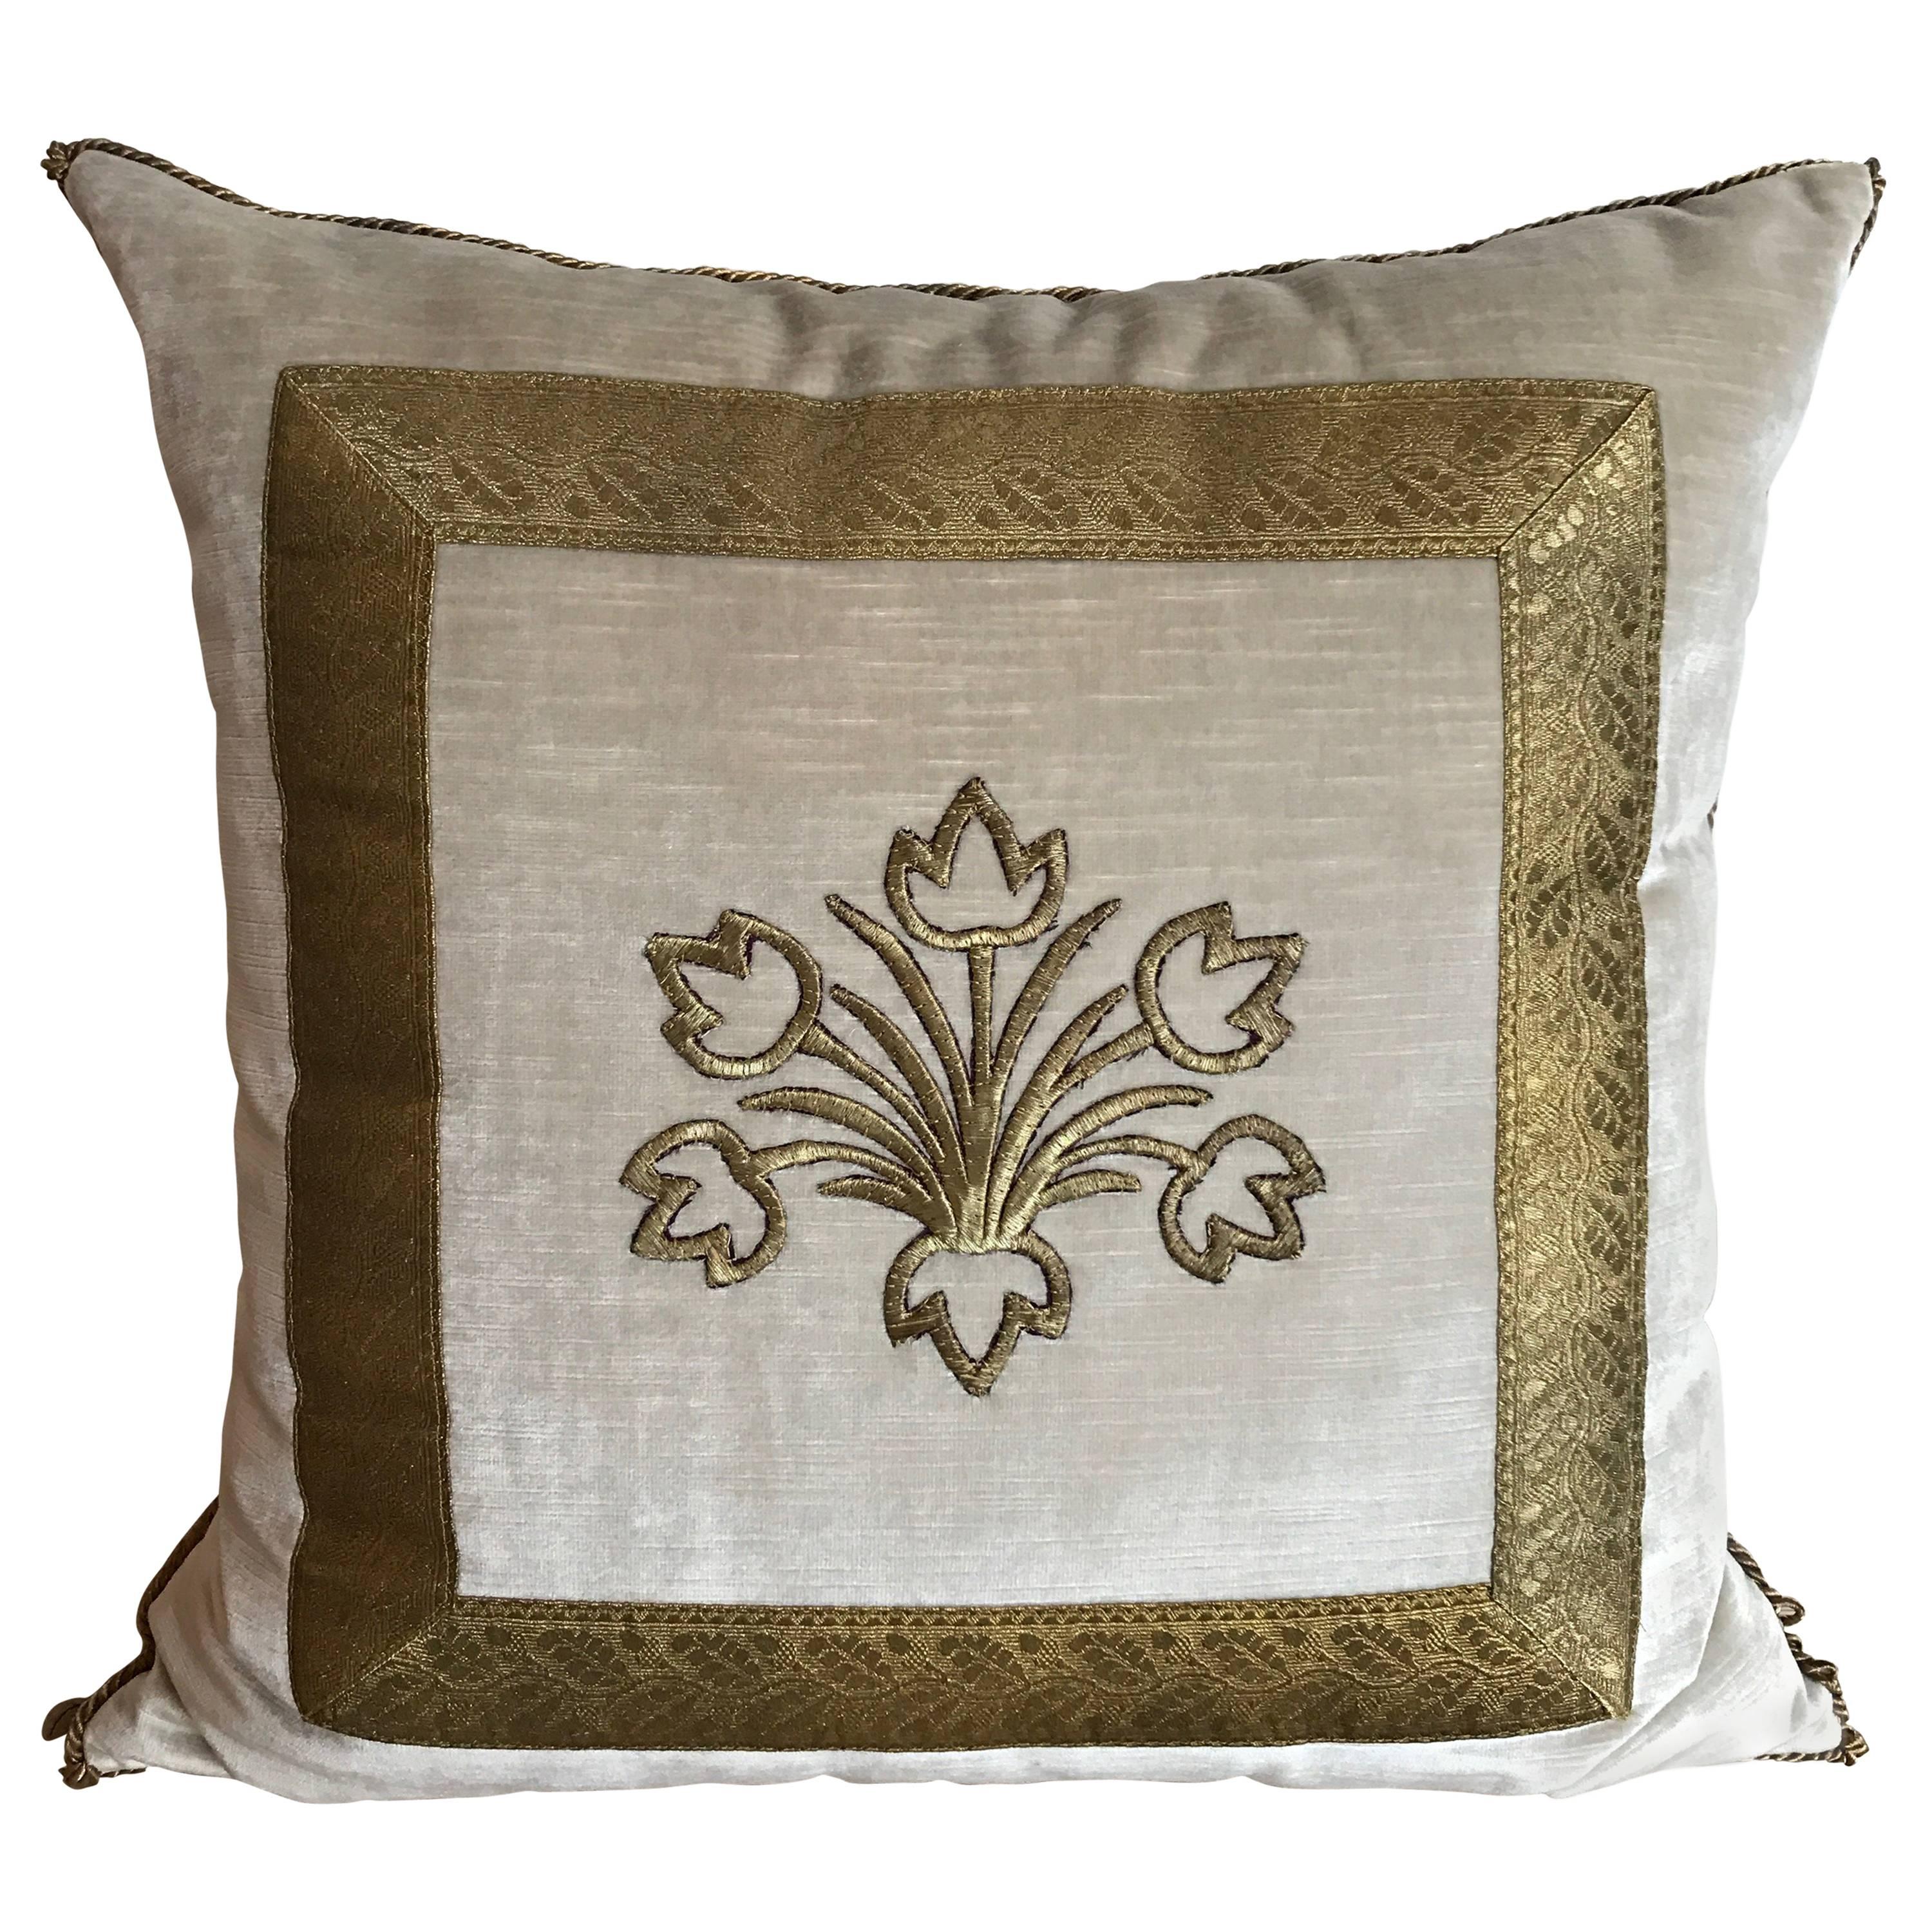 Antique Ottoman Empire Pillow For Sale